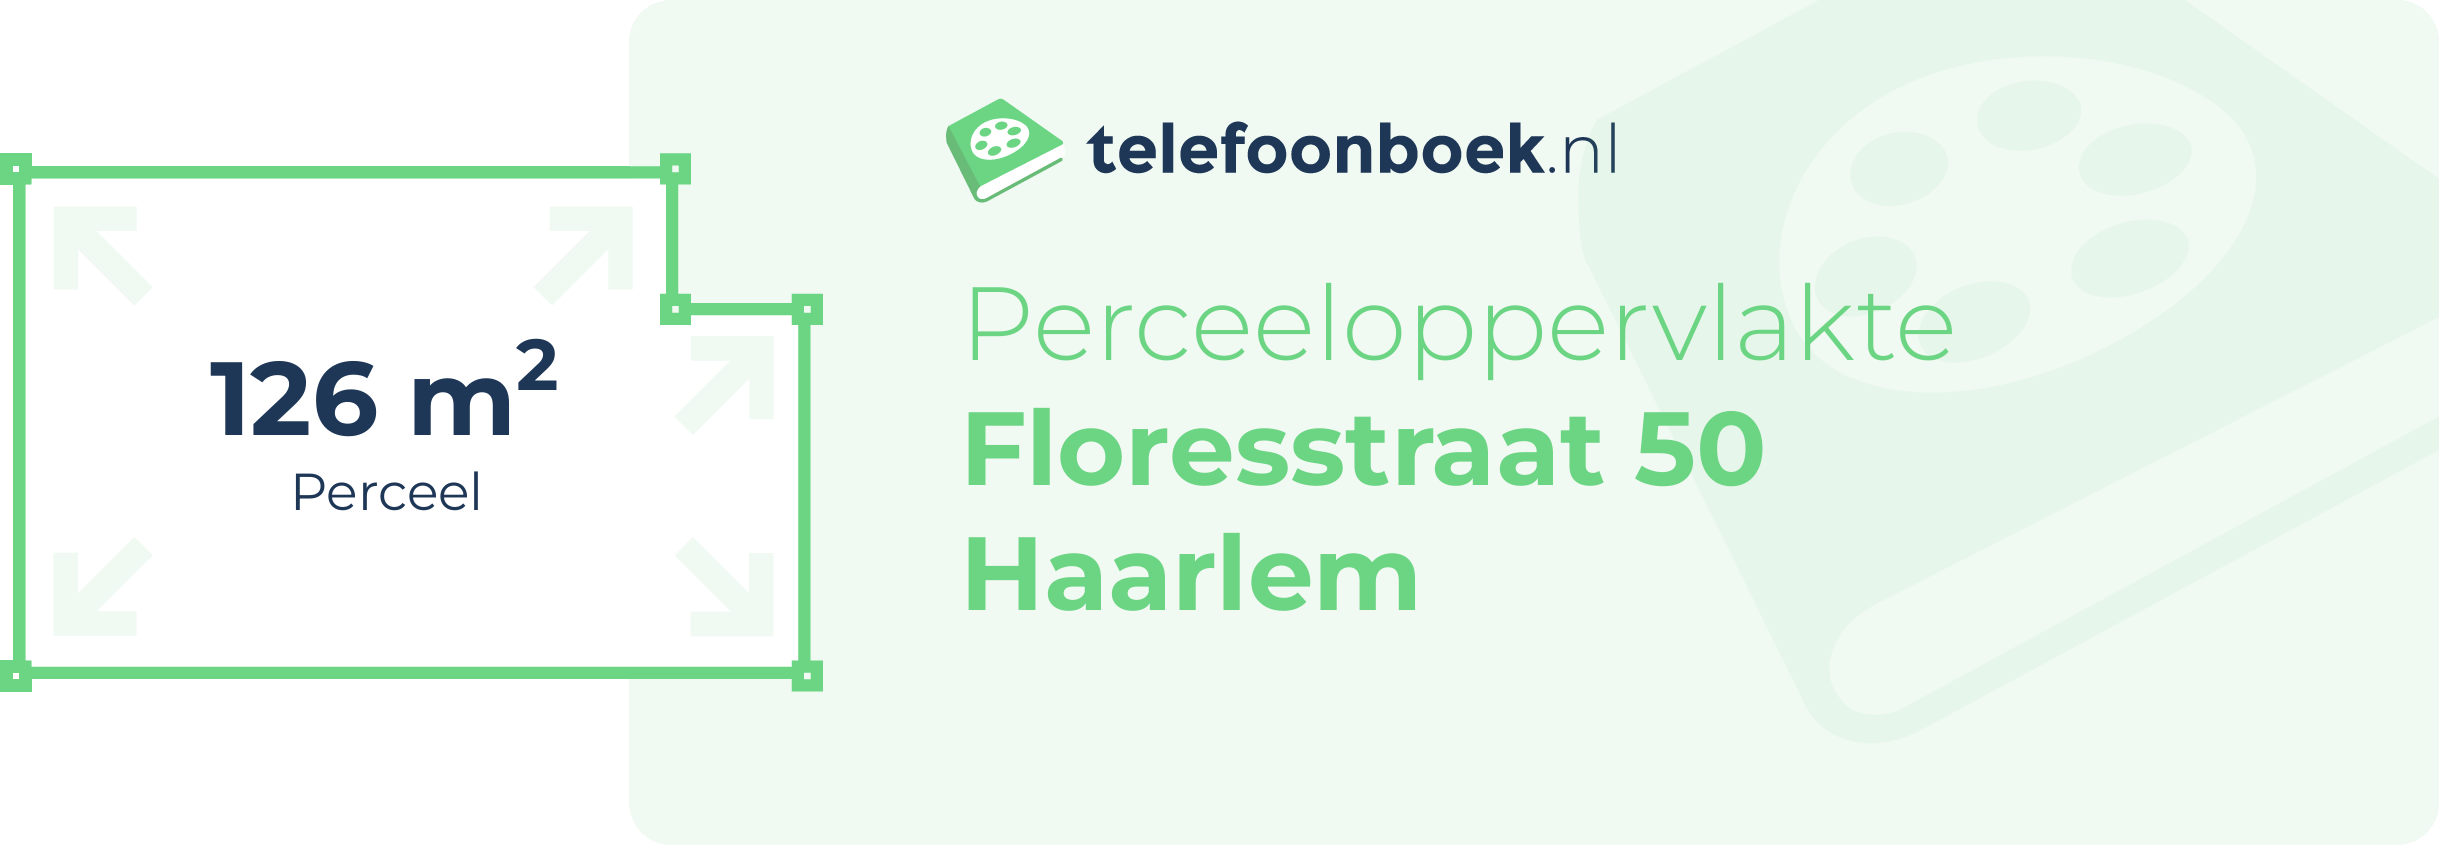 Perceeloppervlakte Floresstraat 50 Haarlem